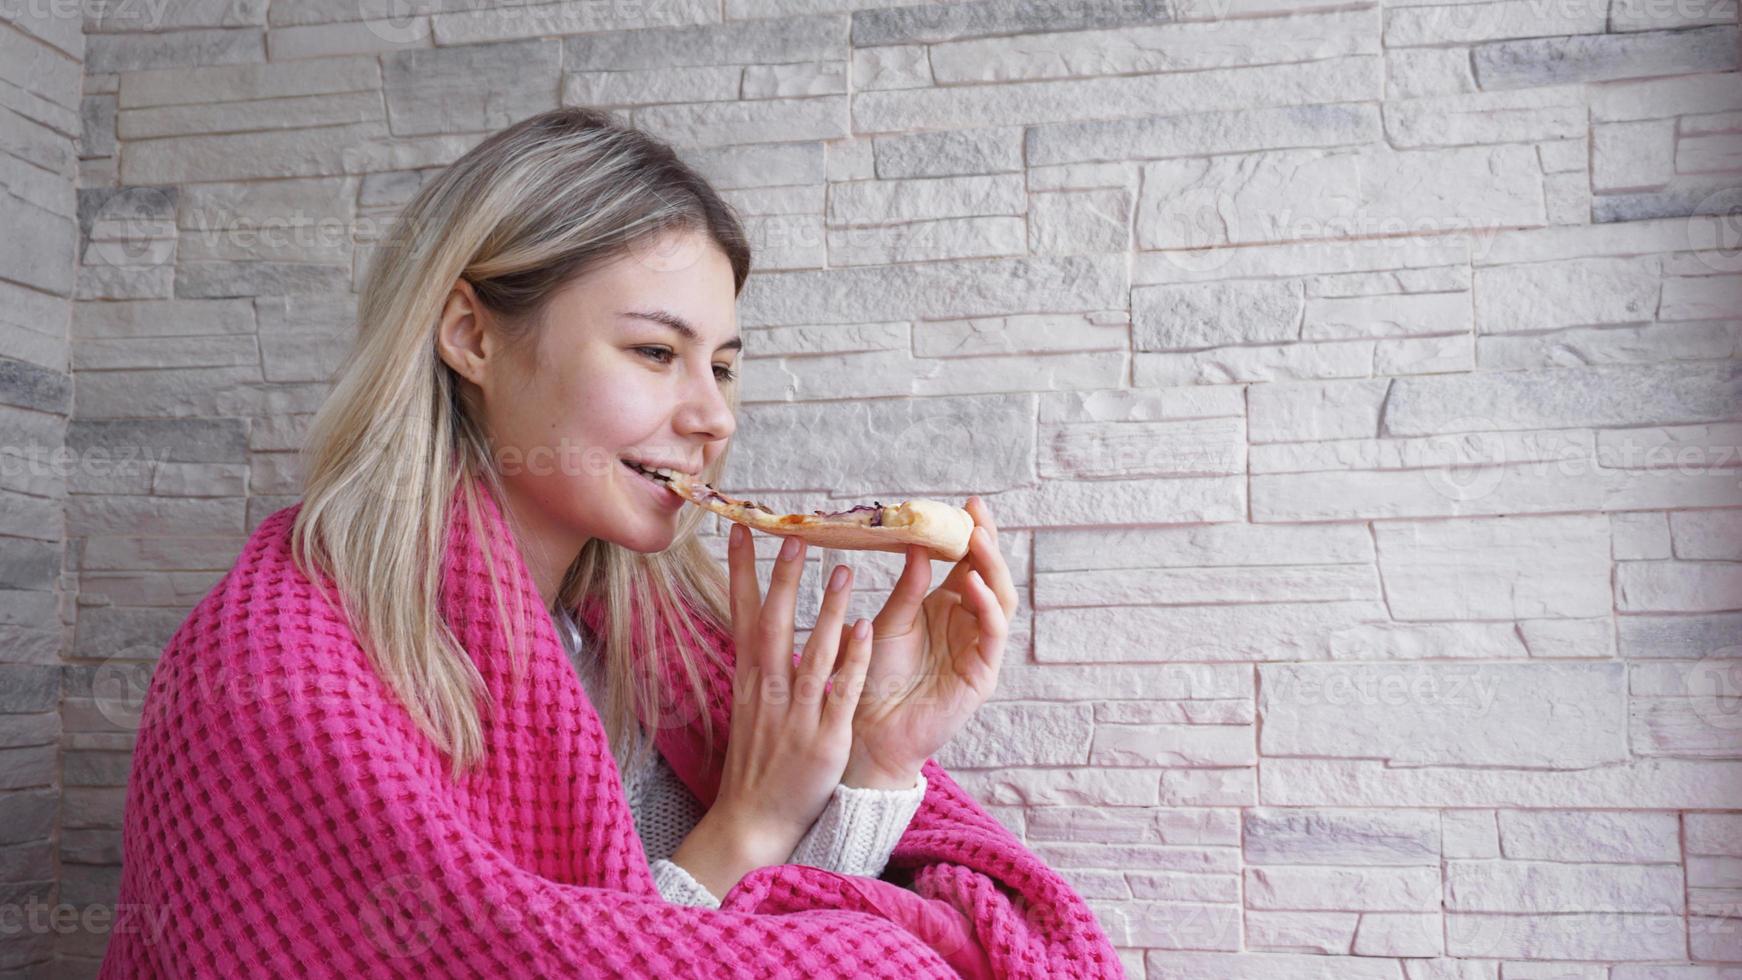 Mulher bonita com manta rosa segurando uma fatia de pizza foto